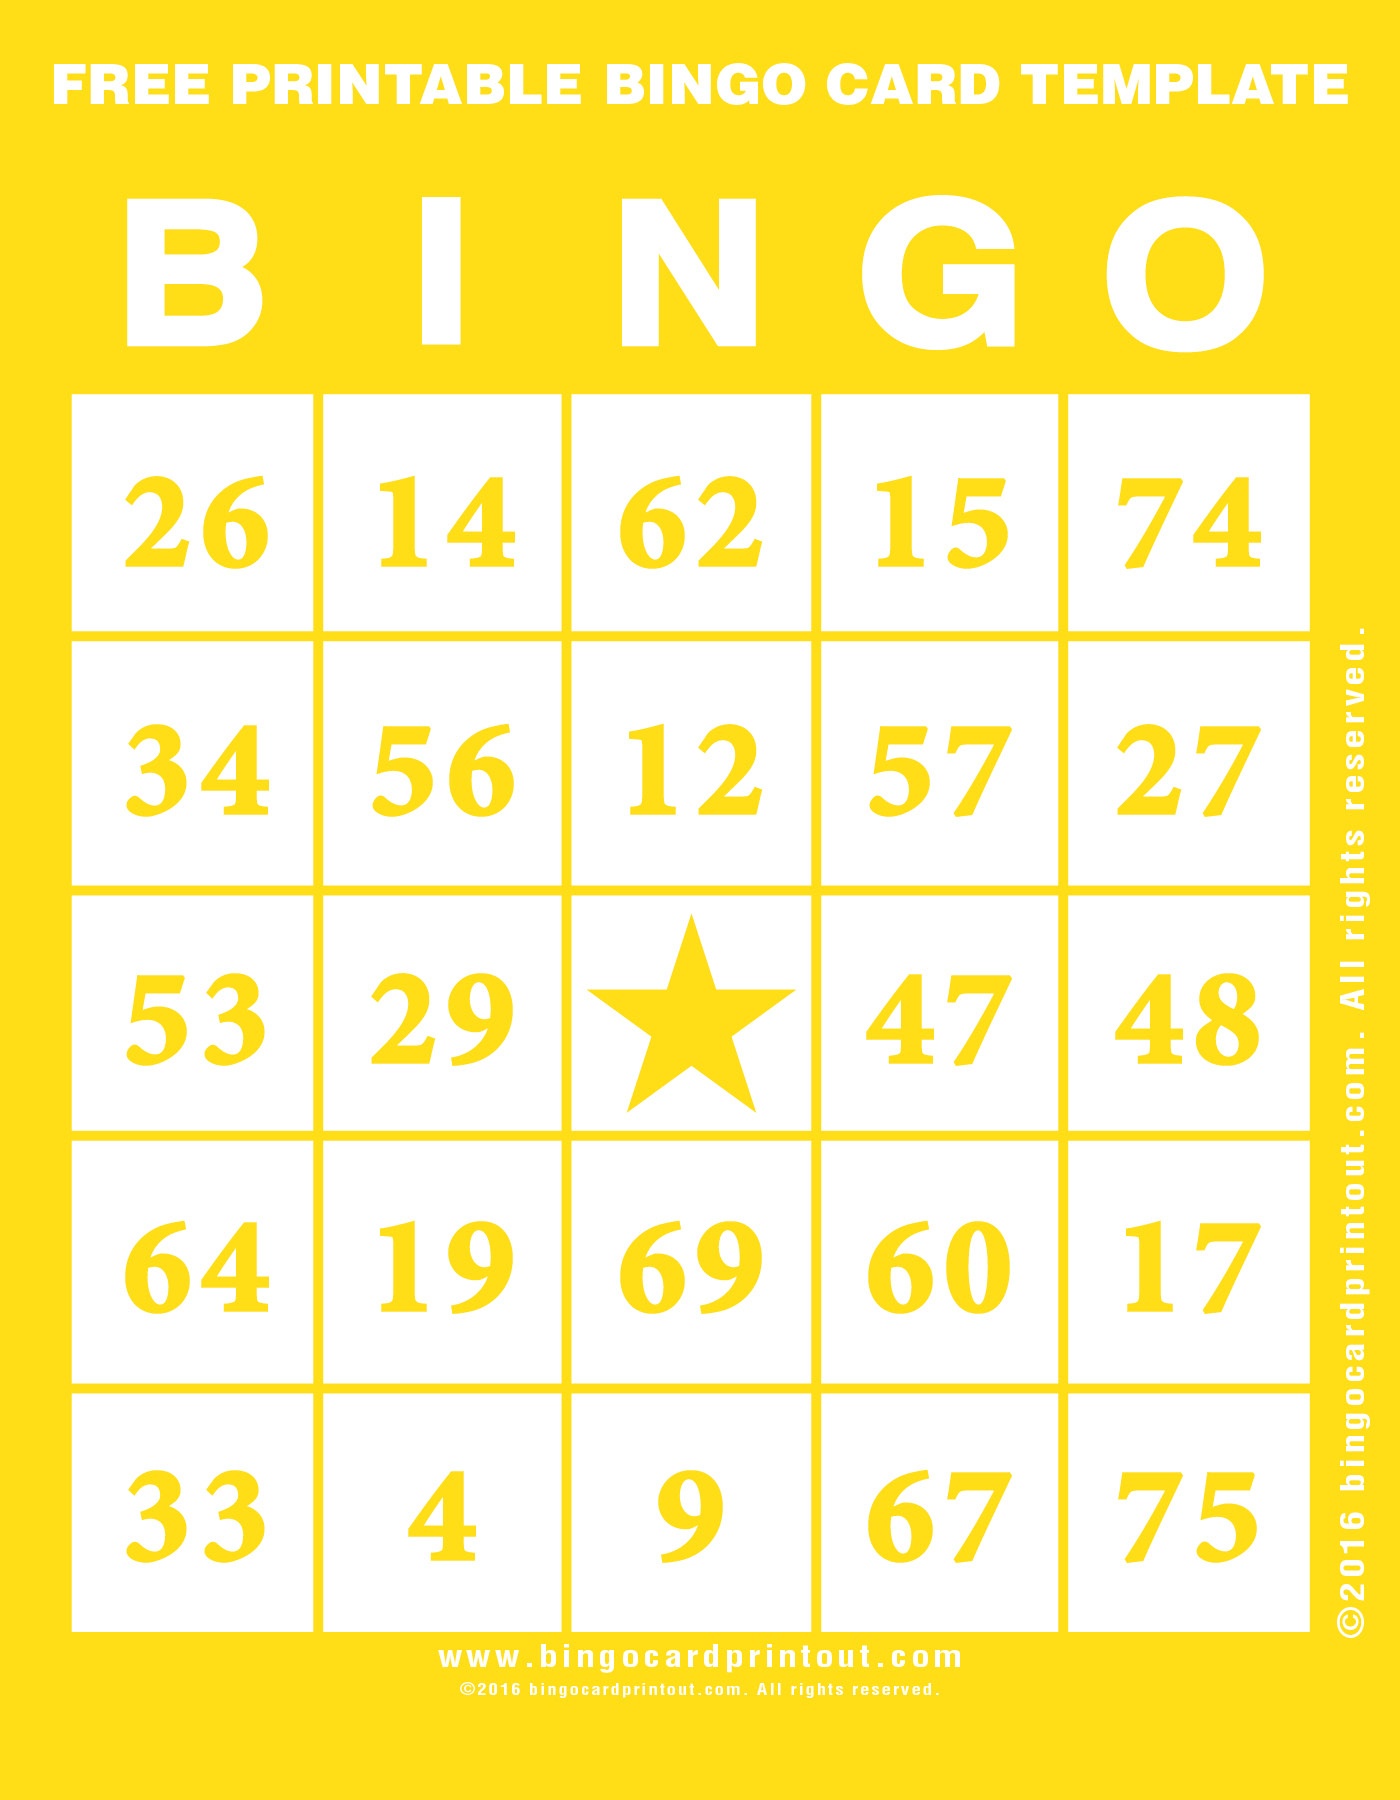 Free Printable Bingo Card Template - Bingocardprintout - Free Printable Bingo Cards